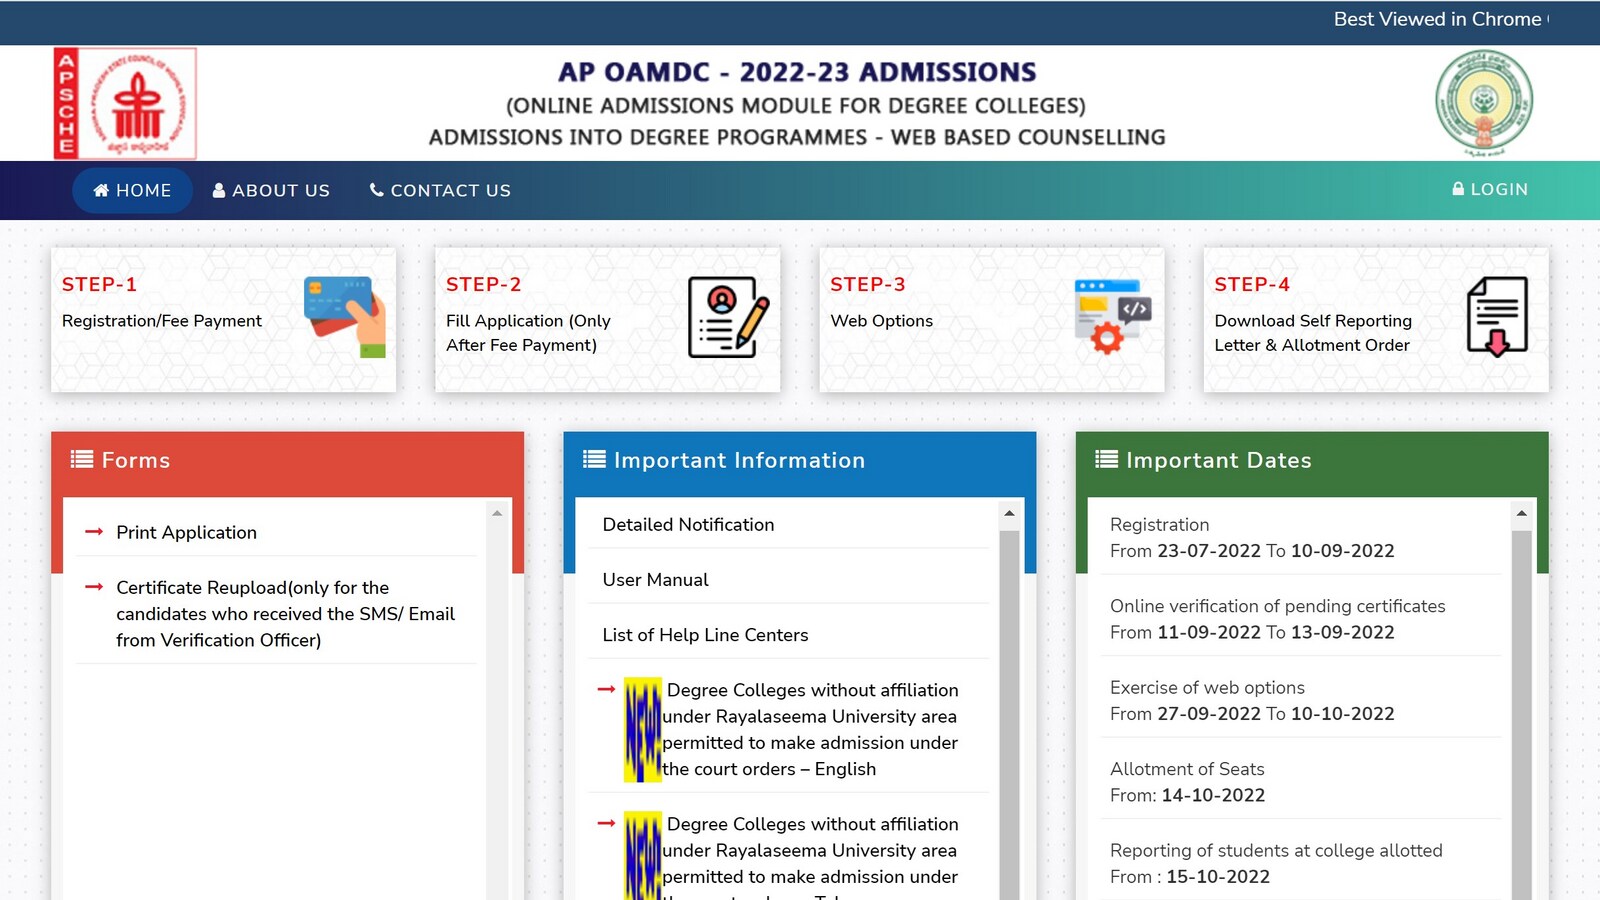 OAMDC 2022 सीट आवंटन परिणाम आज oamdc-apsche.aptonline.in पर जारी